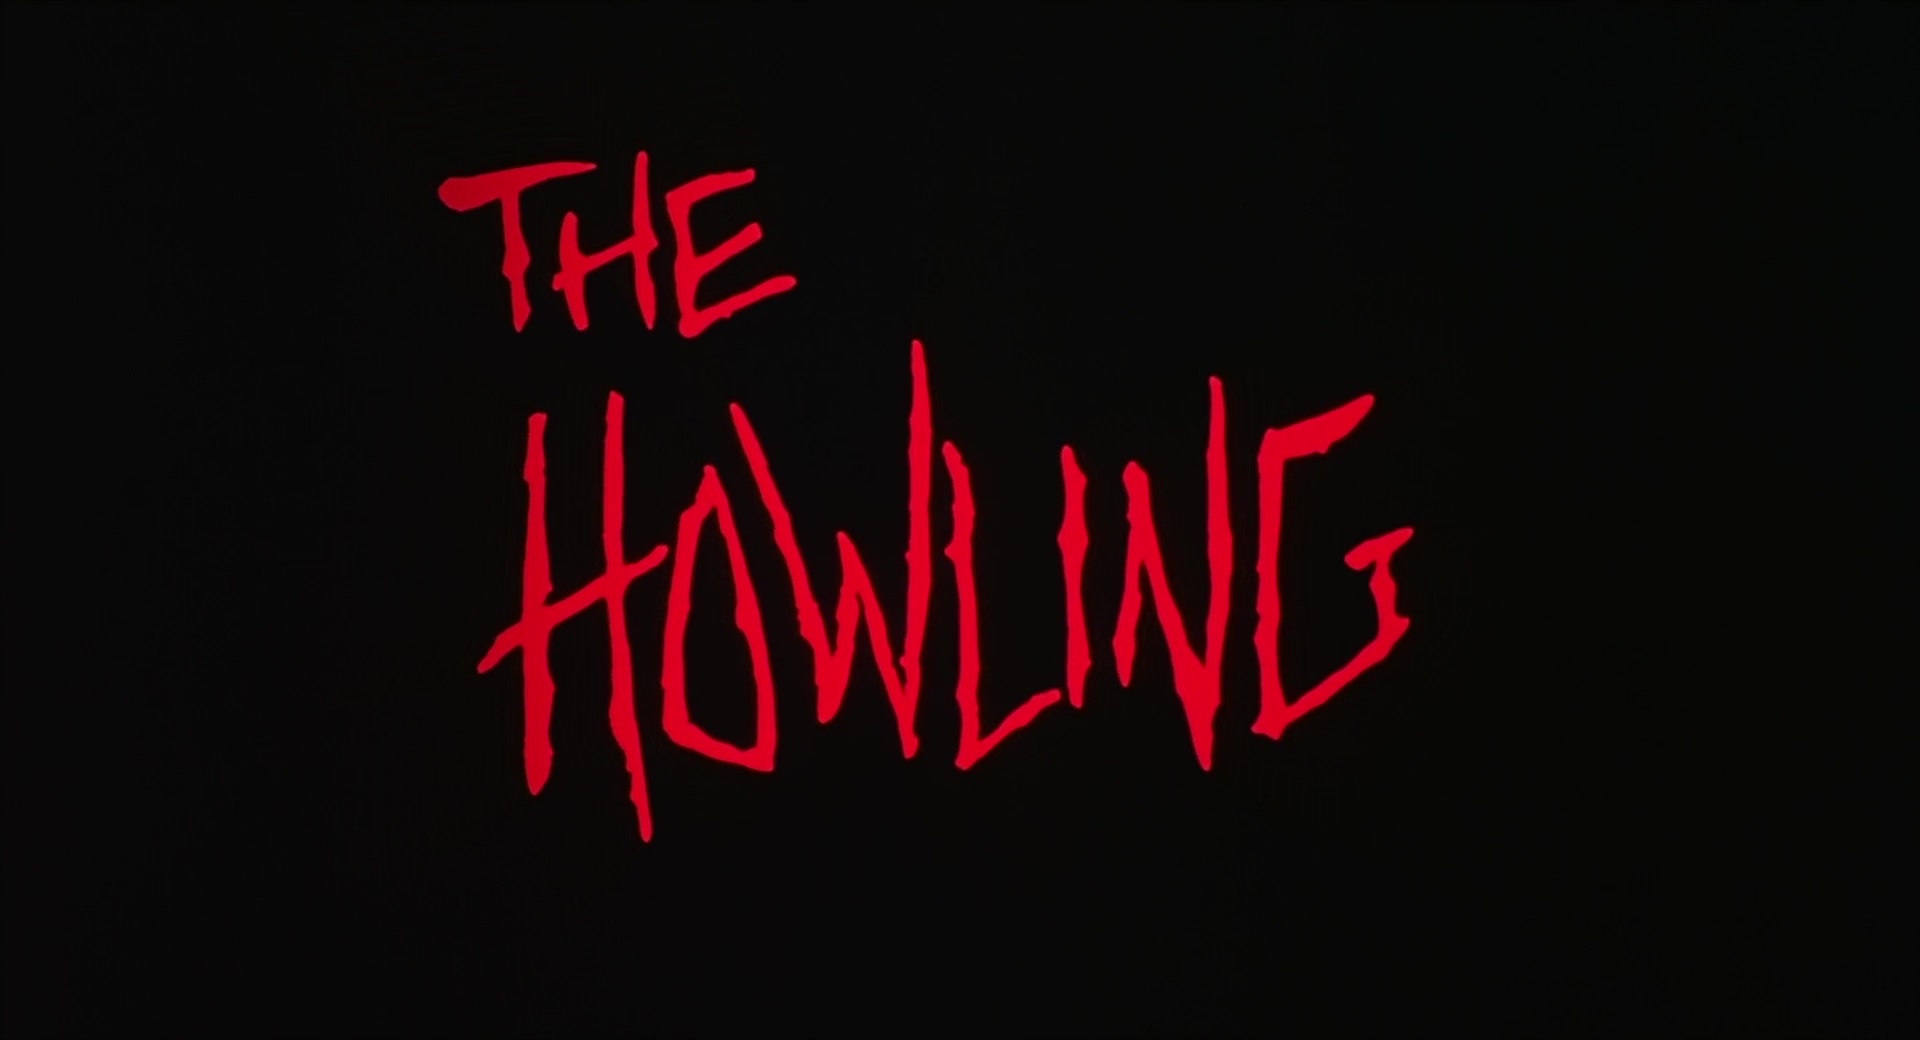 HURLEMENTS (The Howling) de Joe Dante (1981)